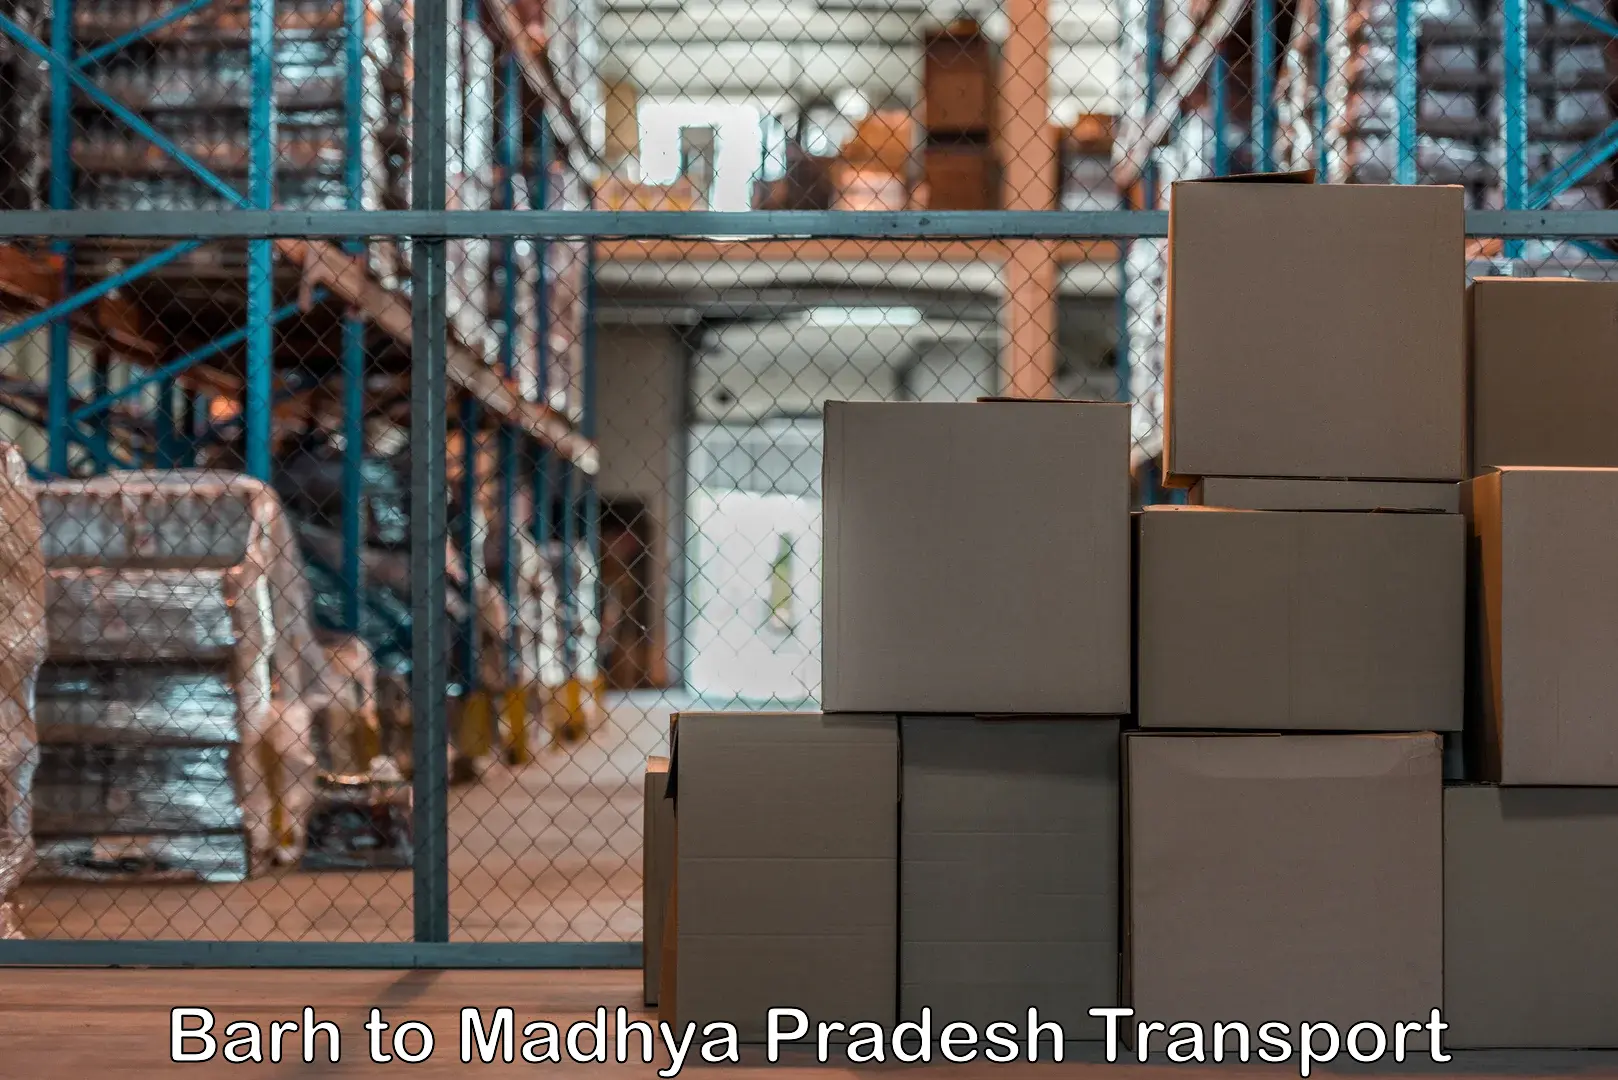 Truck transport companies in India in Barh to Dabra